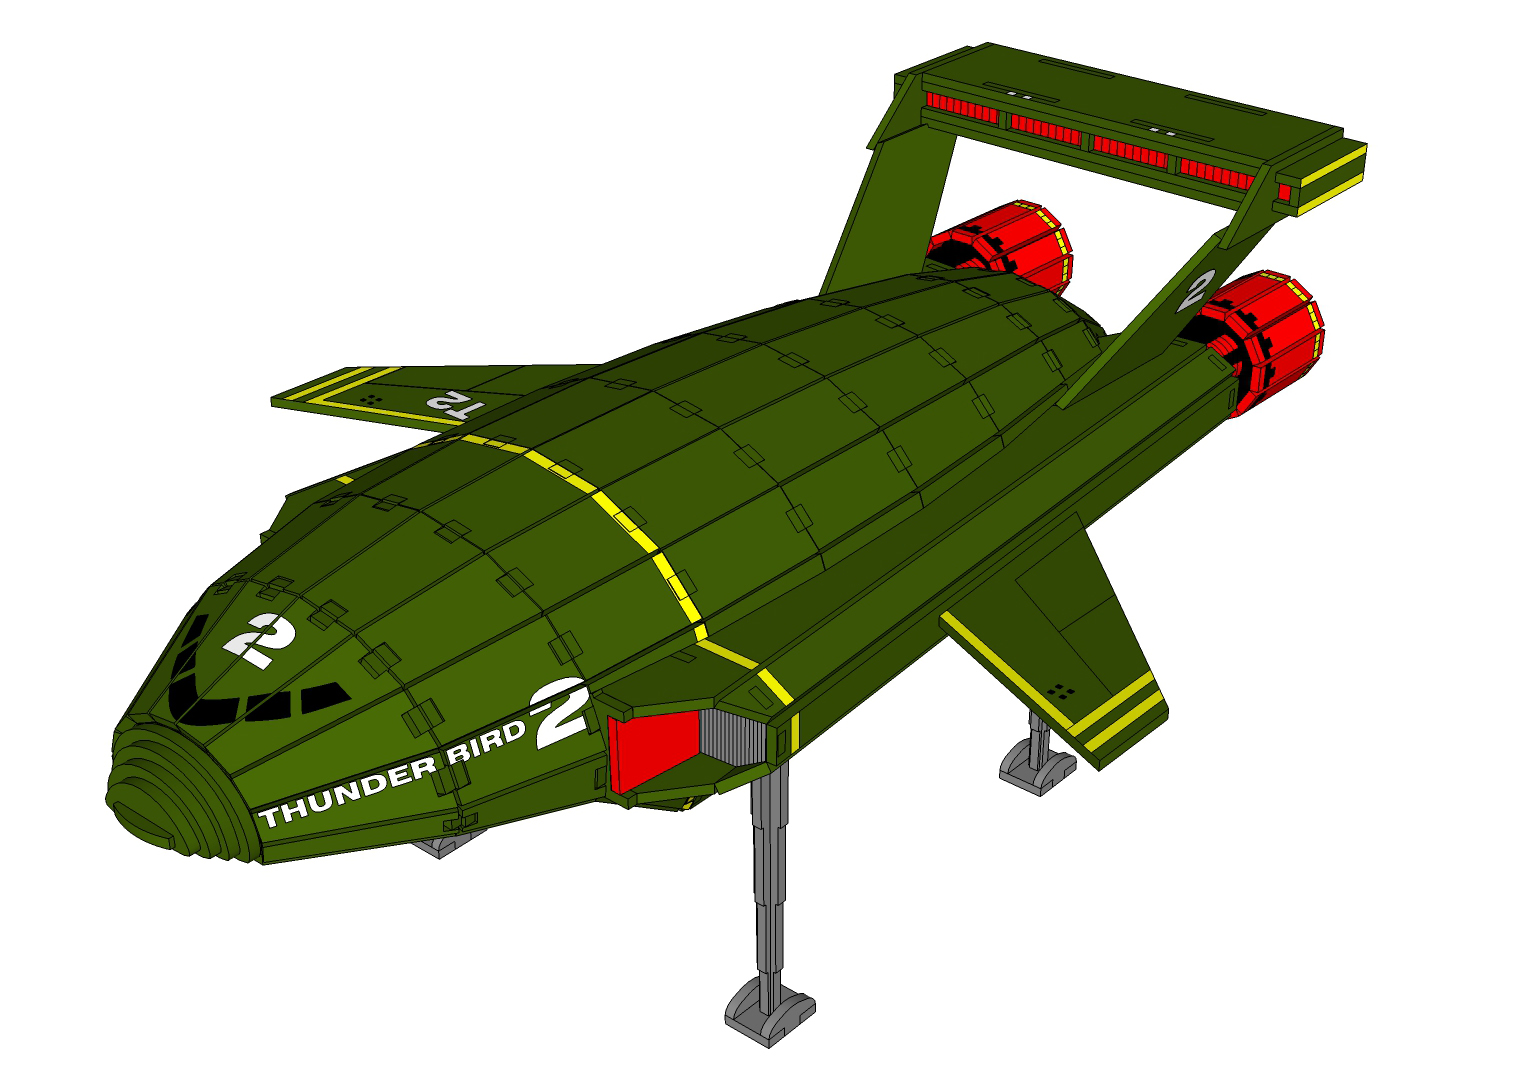 Thunderbird 2-1.jpg